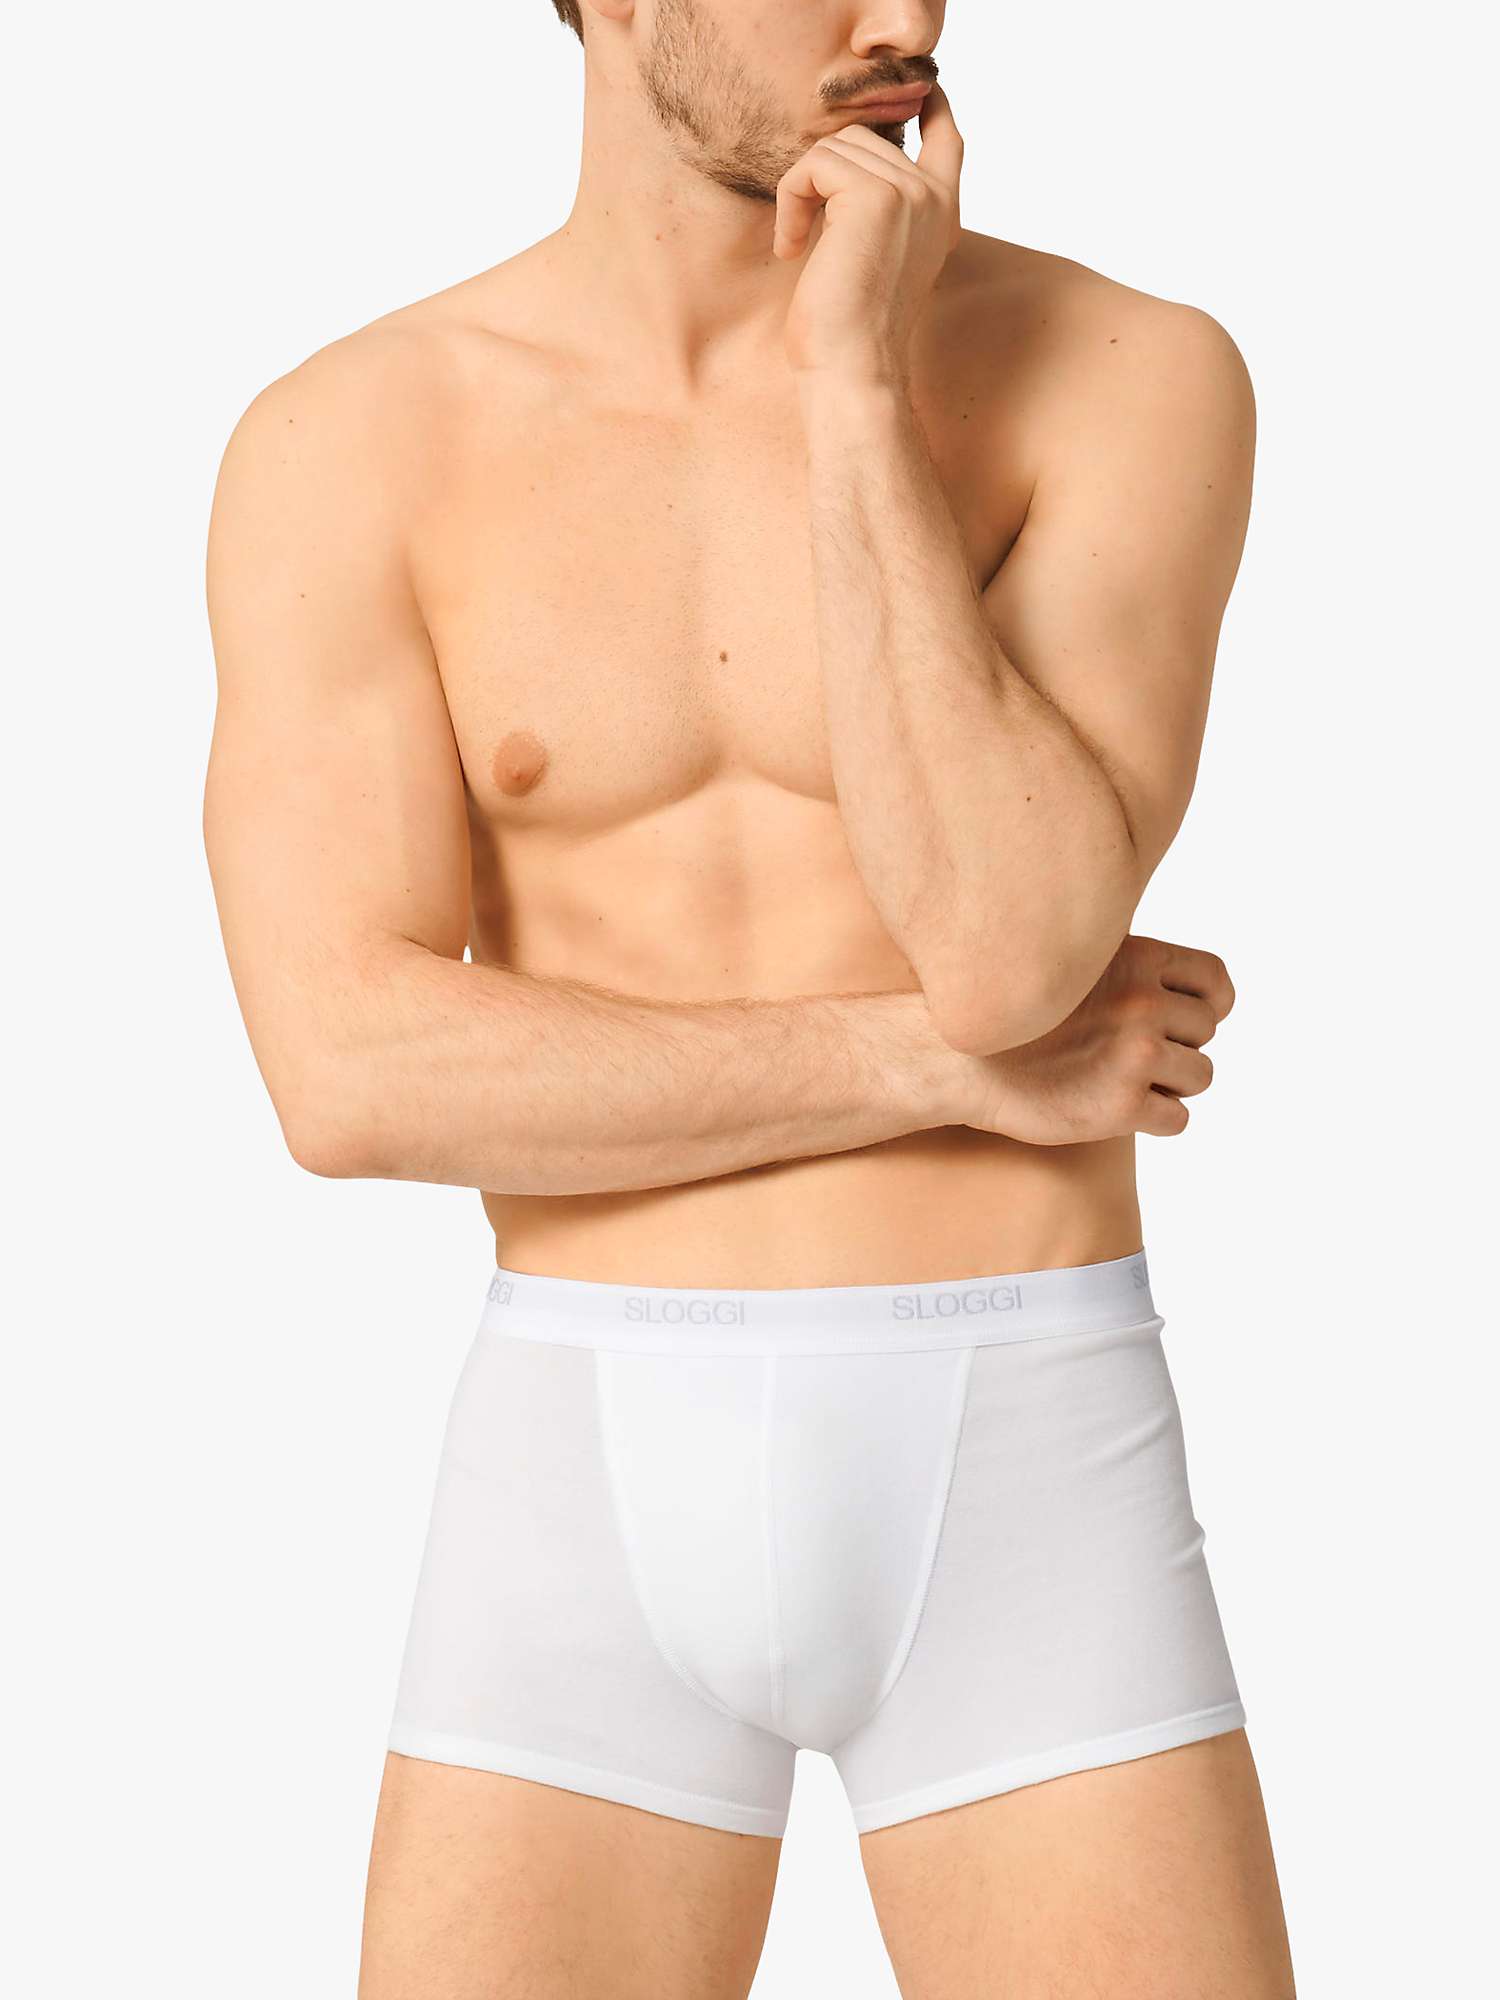 Buy sloggi Basic Shorts, Pack of 2, White Online at johnlewis.com